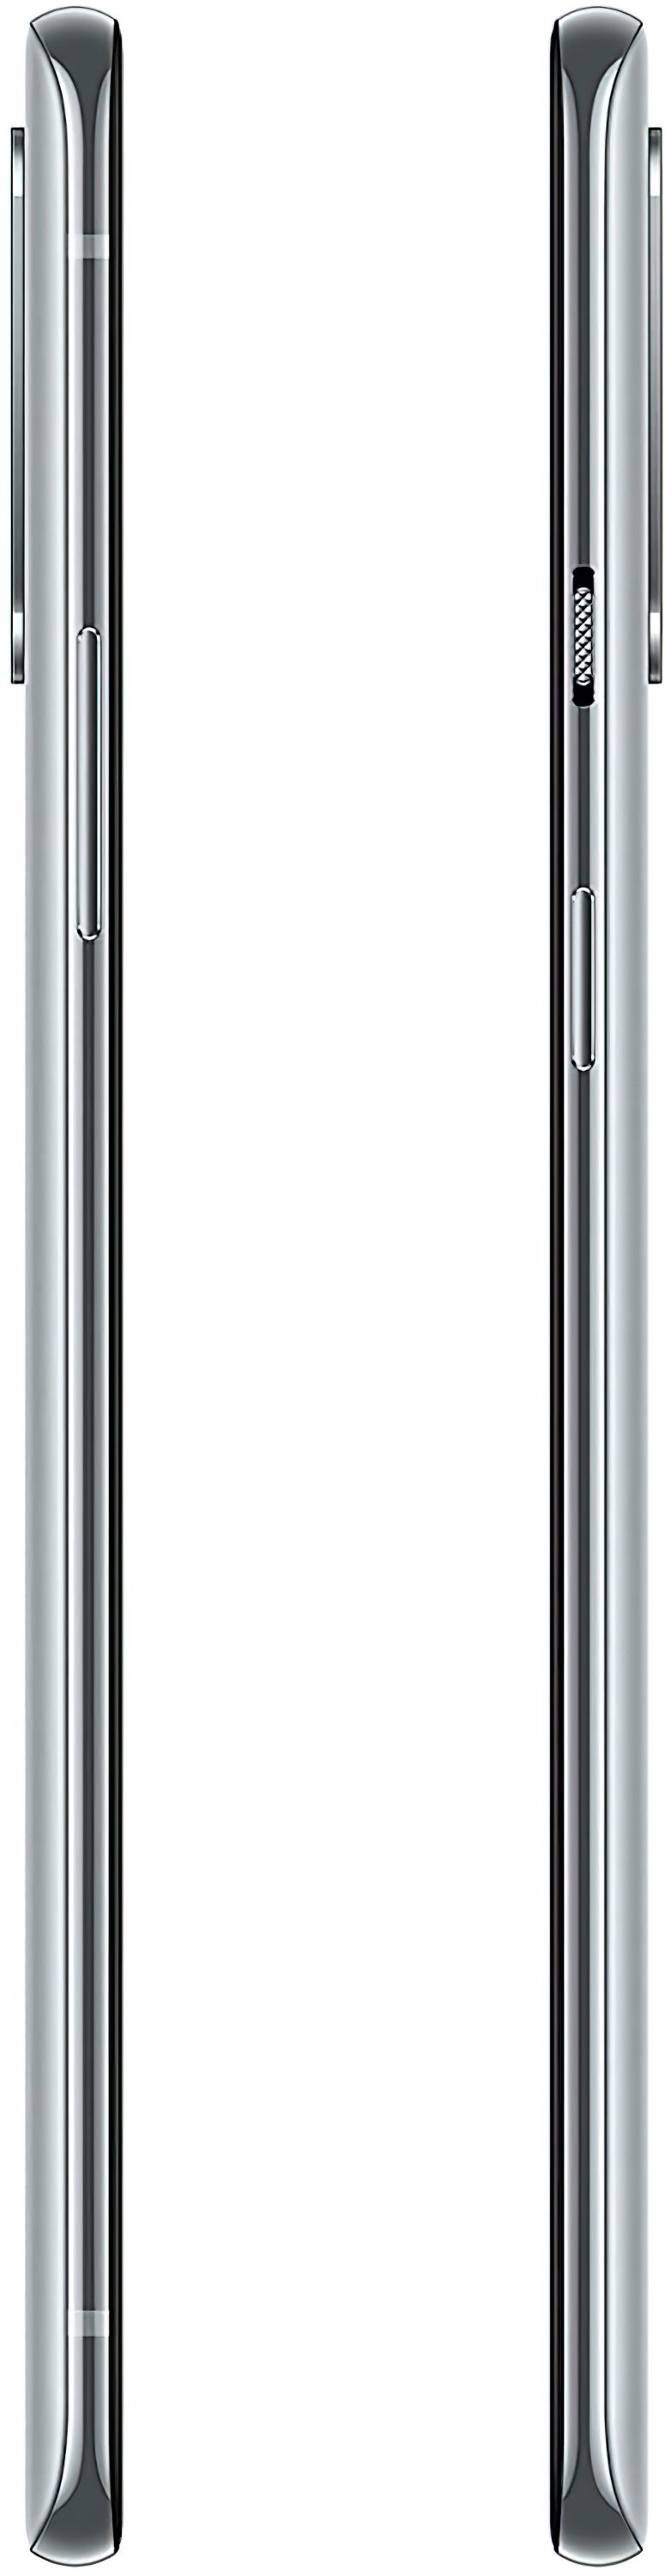 OnePlus 8T / 6.55 Fluid AMOLED 120Hz / Snapdragon 865 / 8GB / 128GB / 4500mAh